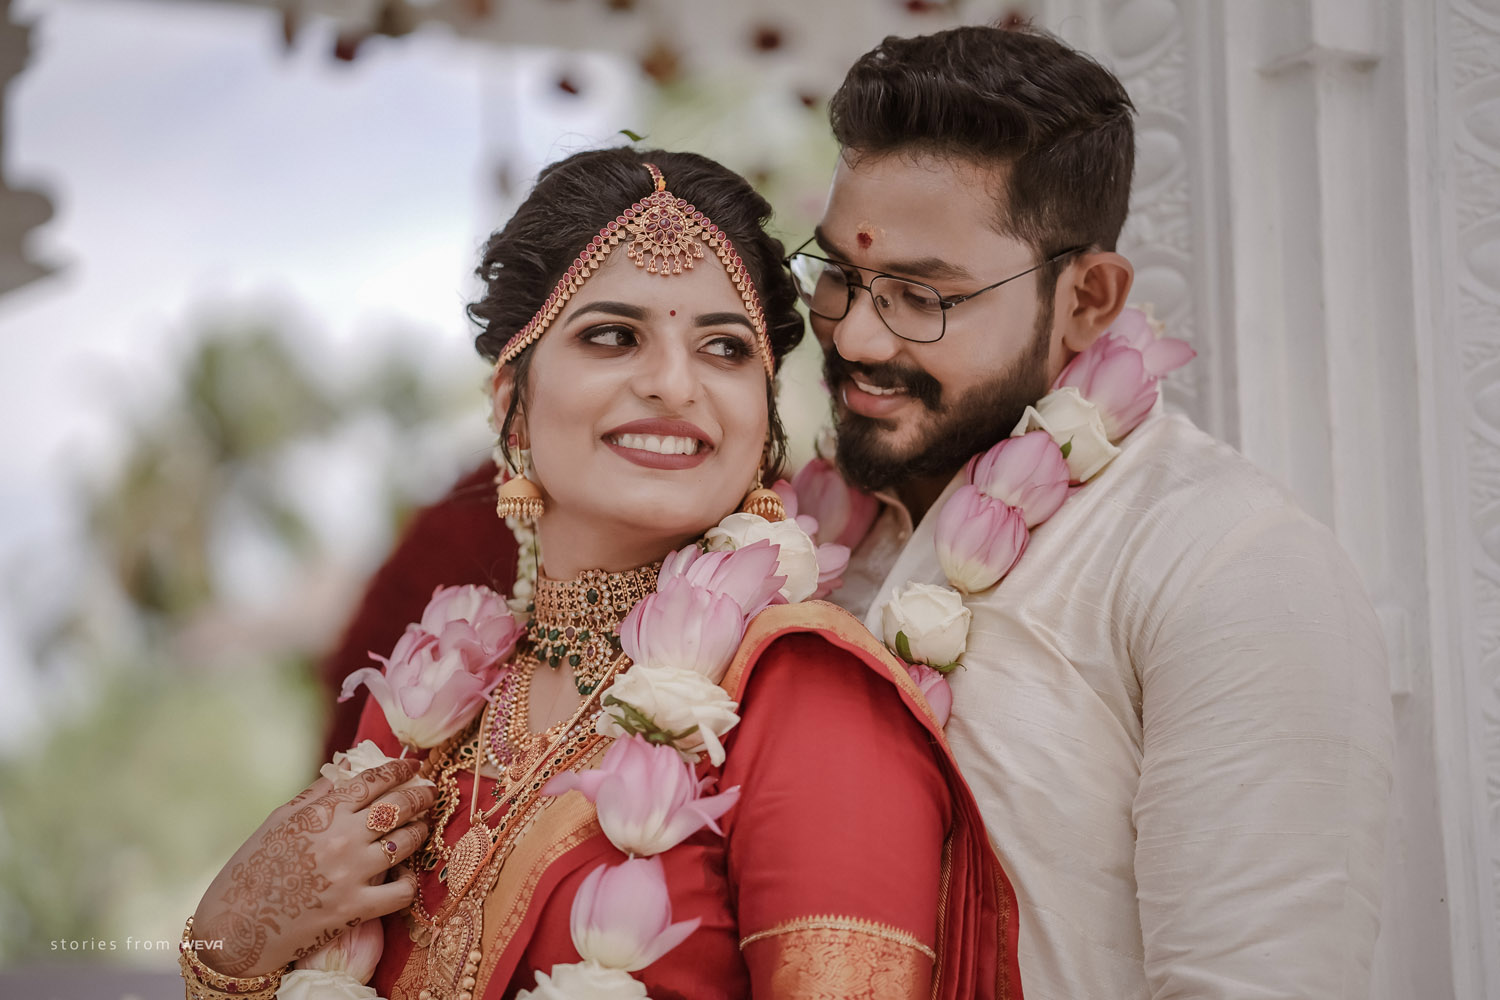 Digital Studio in Kottayam, Kerala | Kerala Wedding Photography - kottayam  | About Us